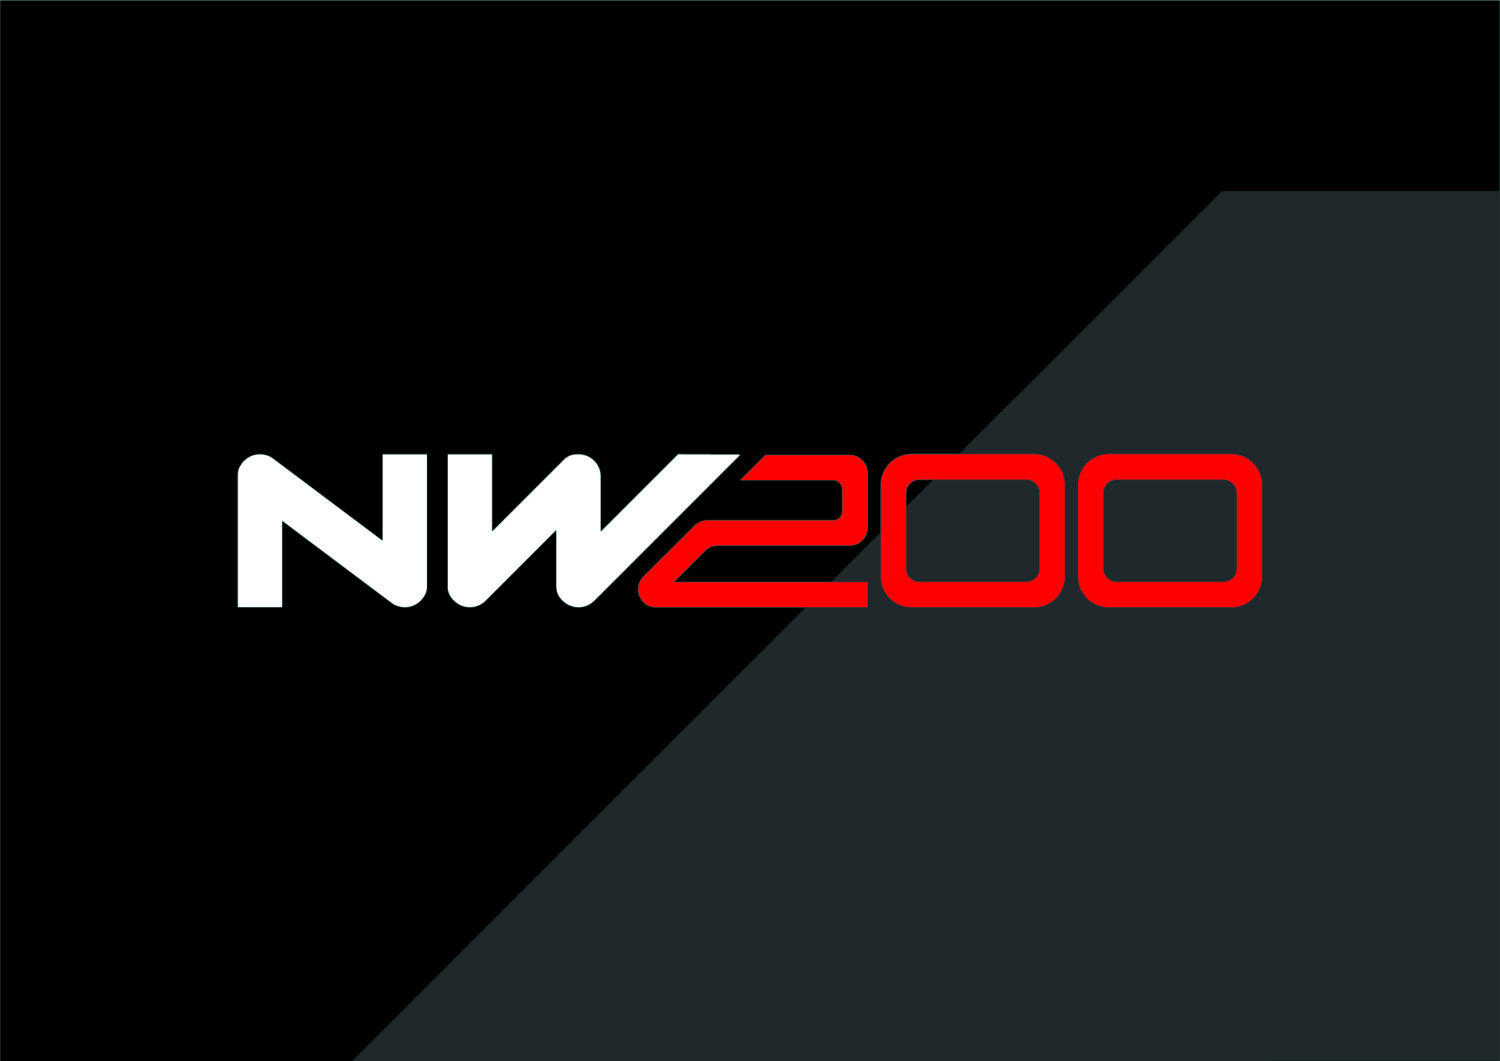 www.northwest200.org